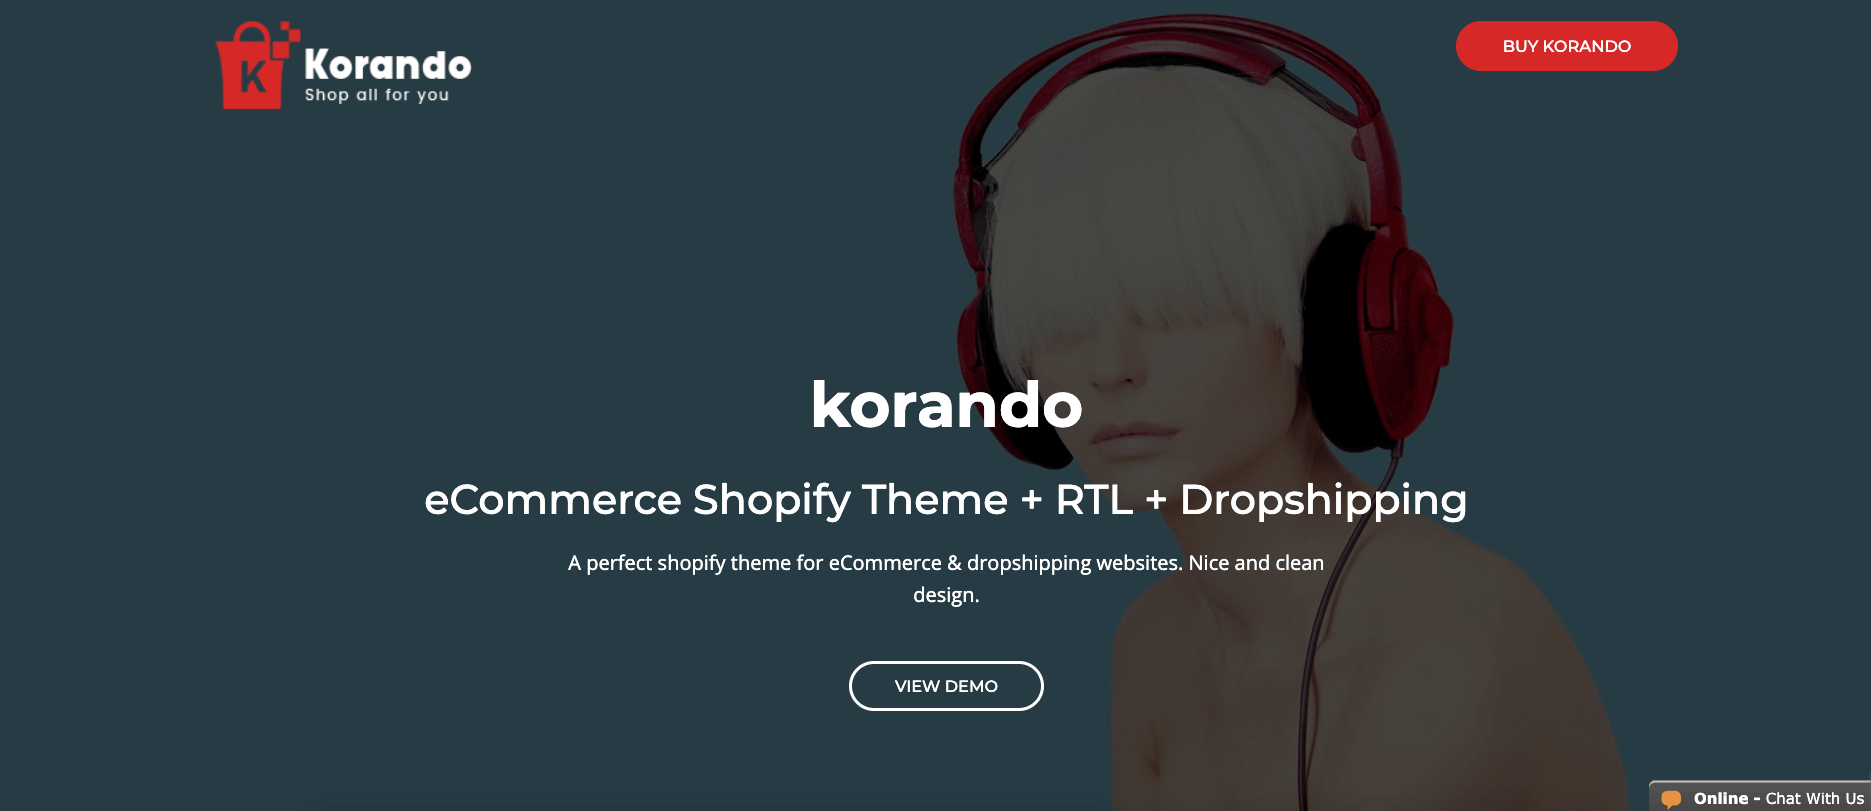 Korando Shopify Theme Best Shopify Themes for Dropshipping